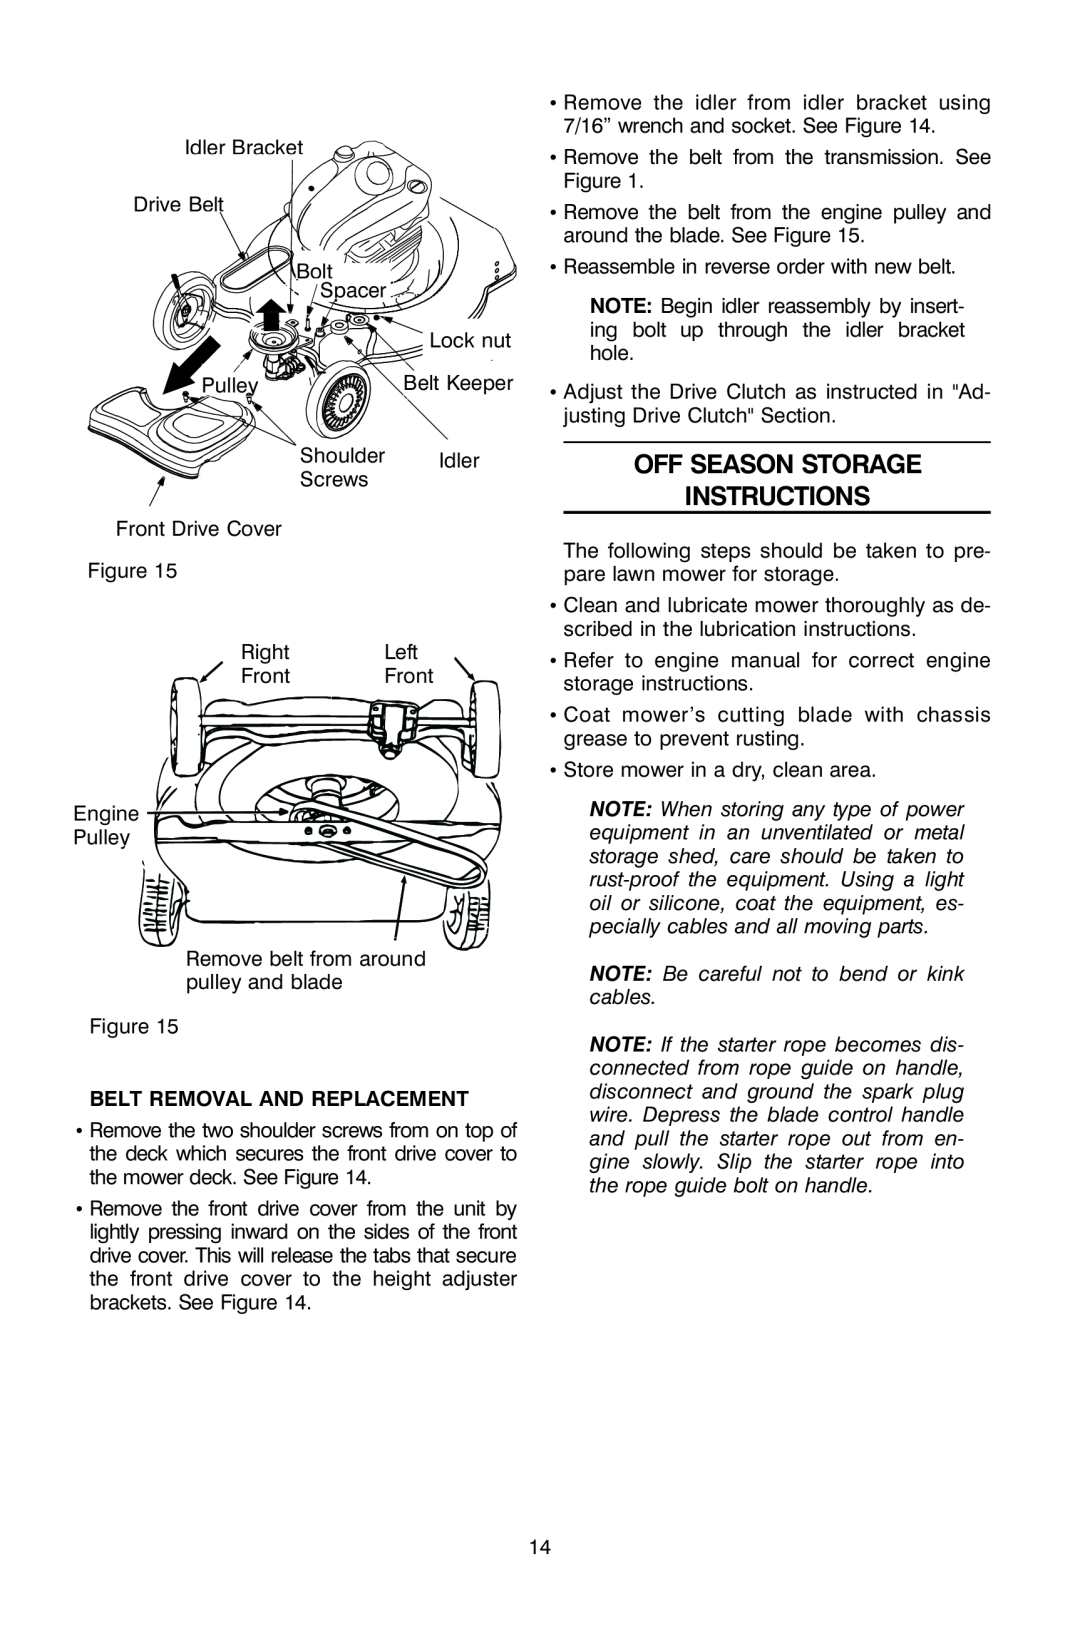 Troy-Bilt OG-4605 owner manual Off Season Storage Instructions, Belt Removal And Replacement 